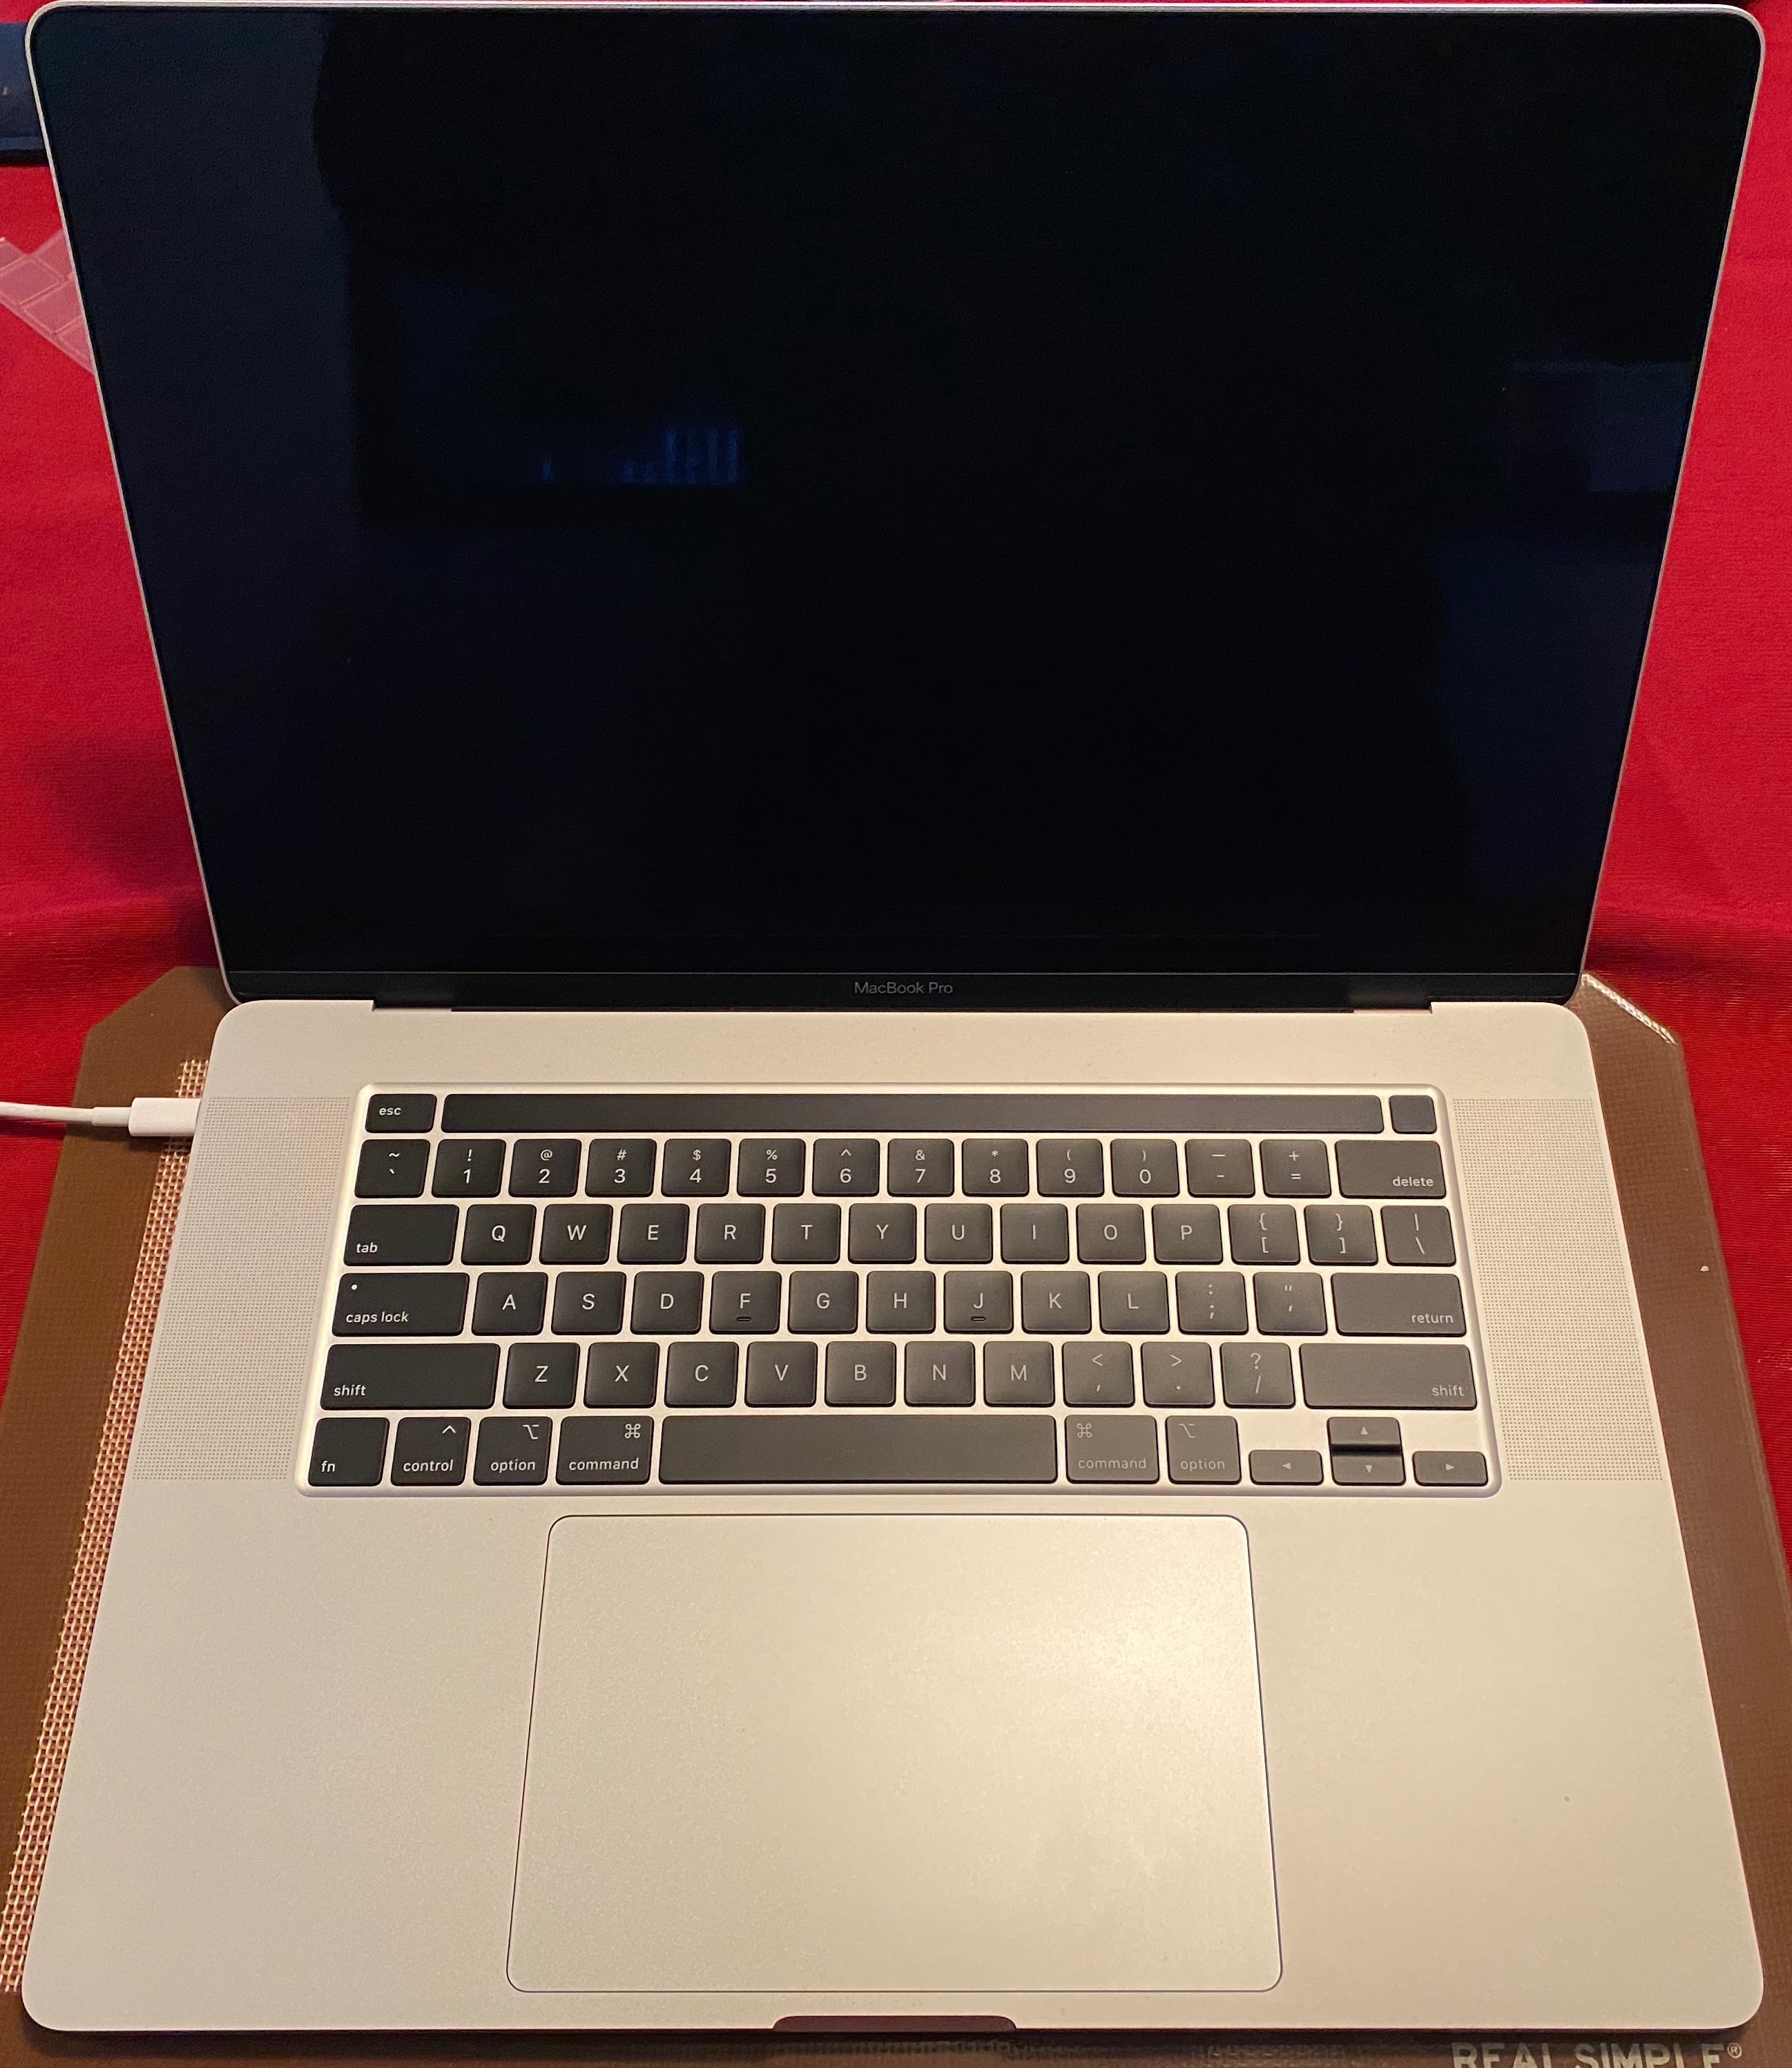 Glad borst functie The rubber around MacBook Pro screen melt… - Apple Community